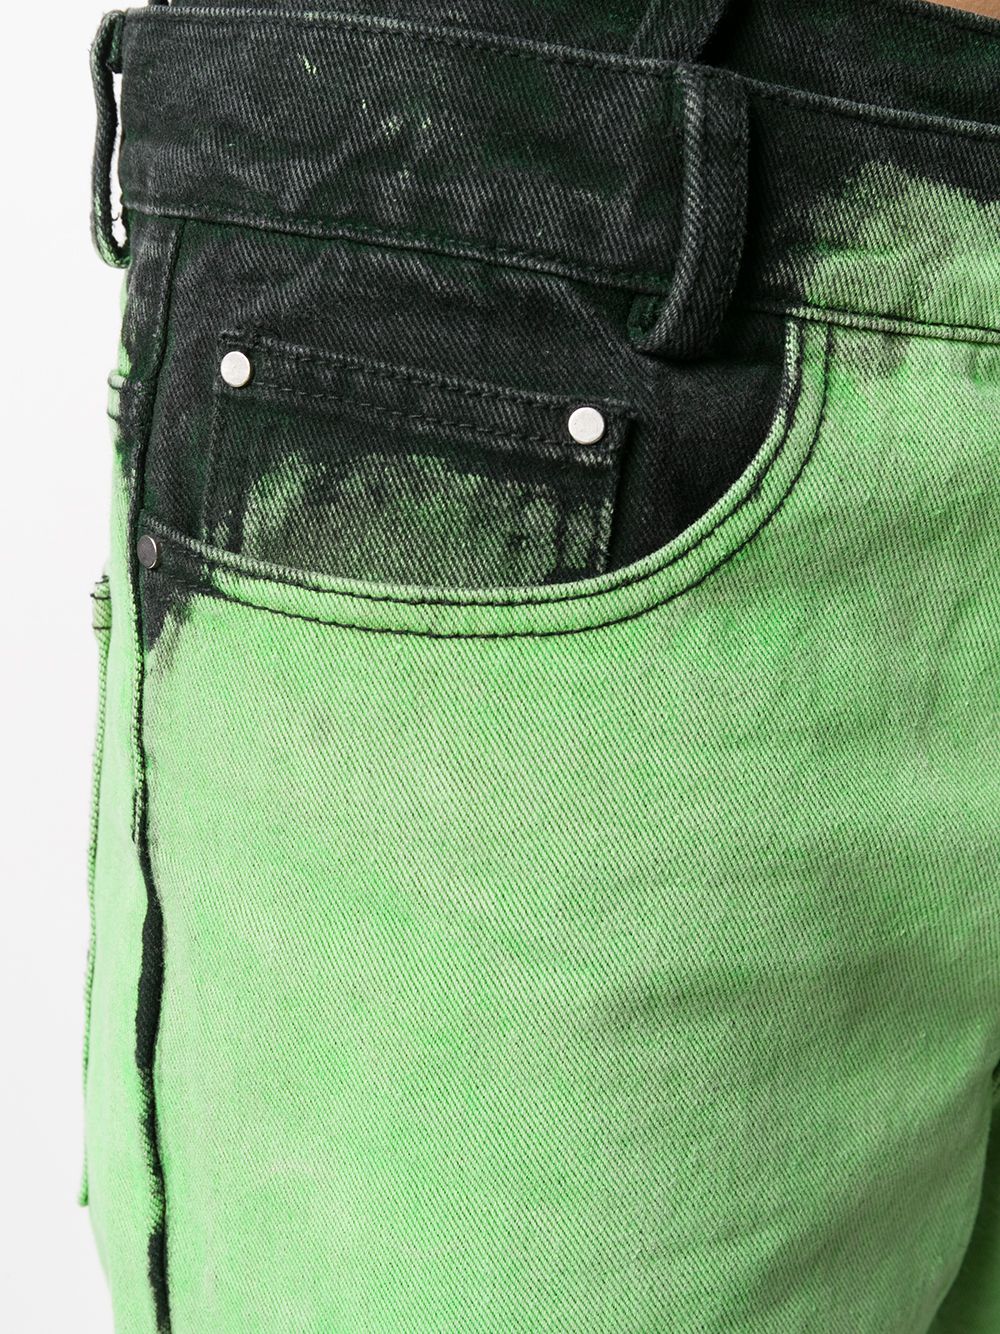 фото Feng cheng wang джинсы в двух тонах